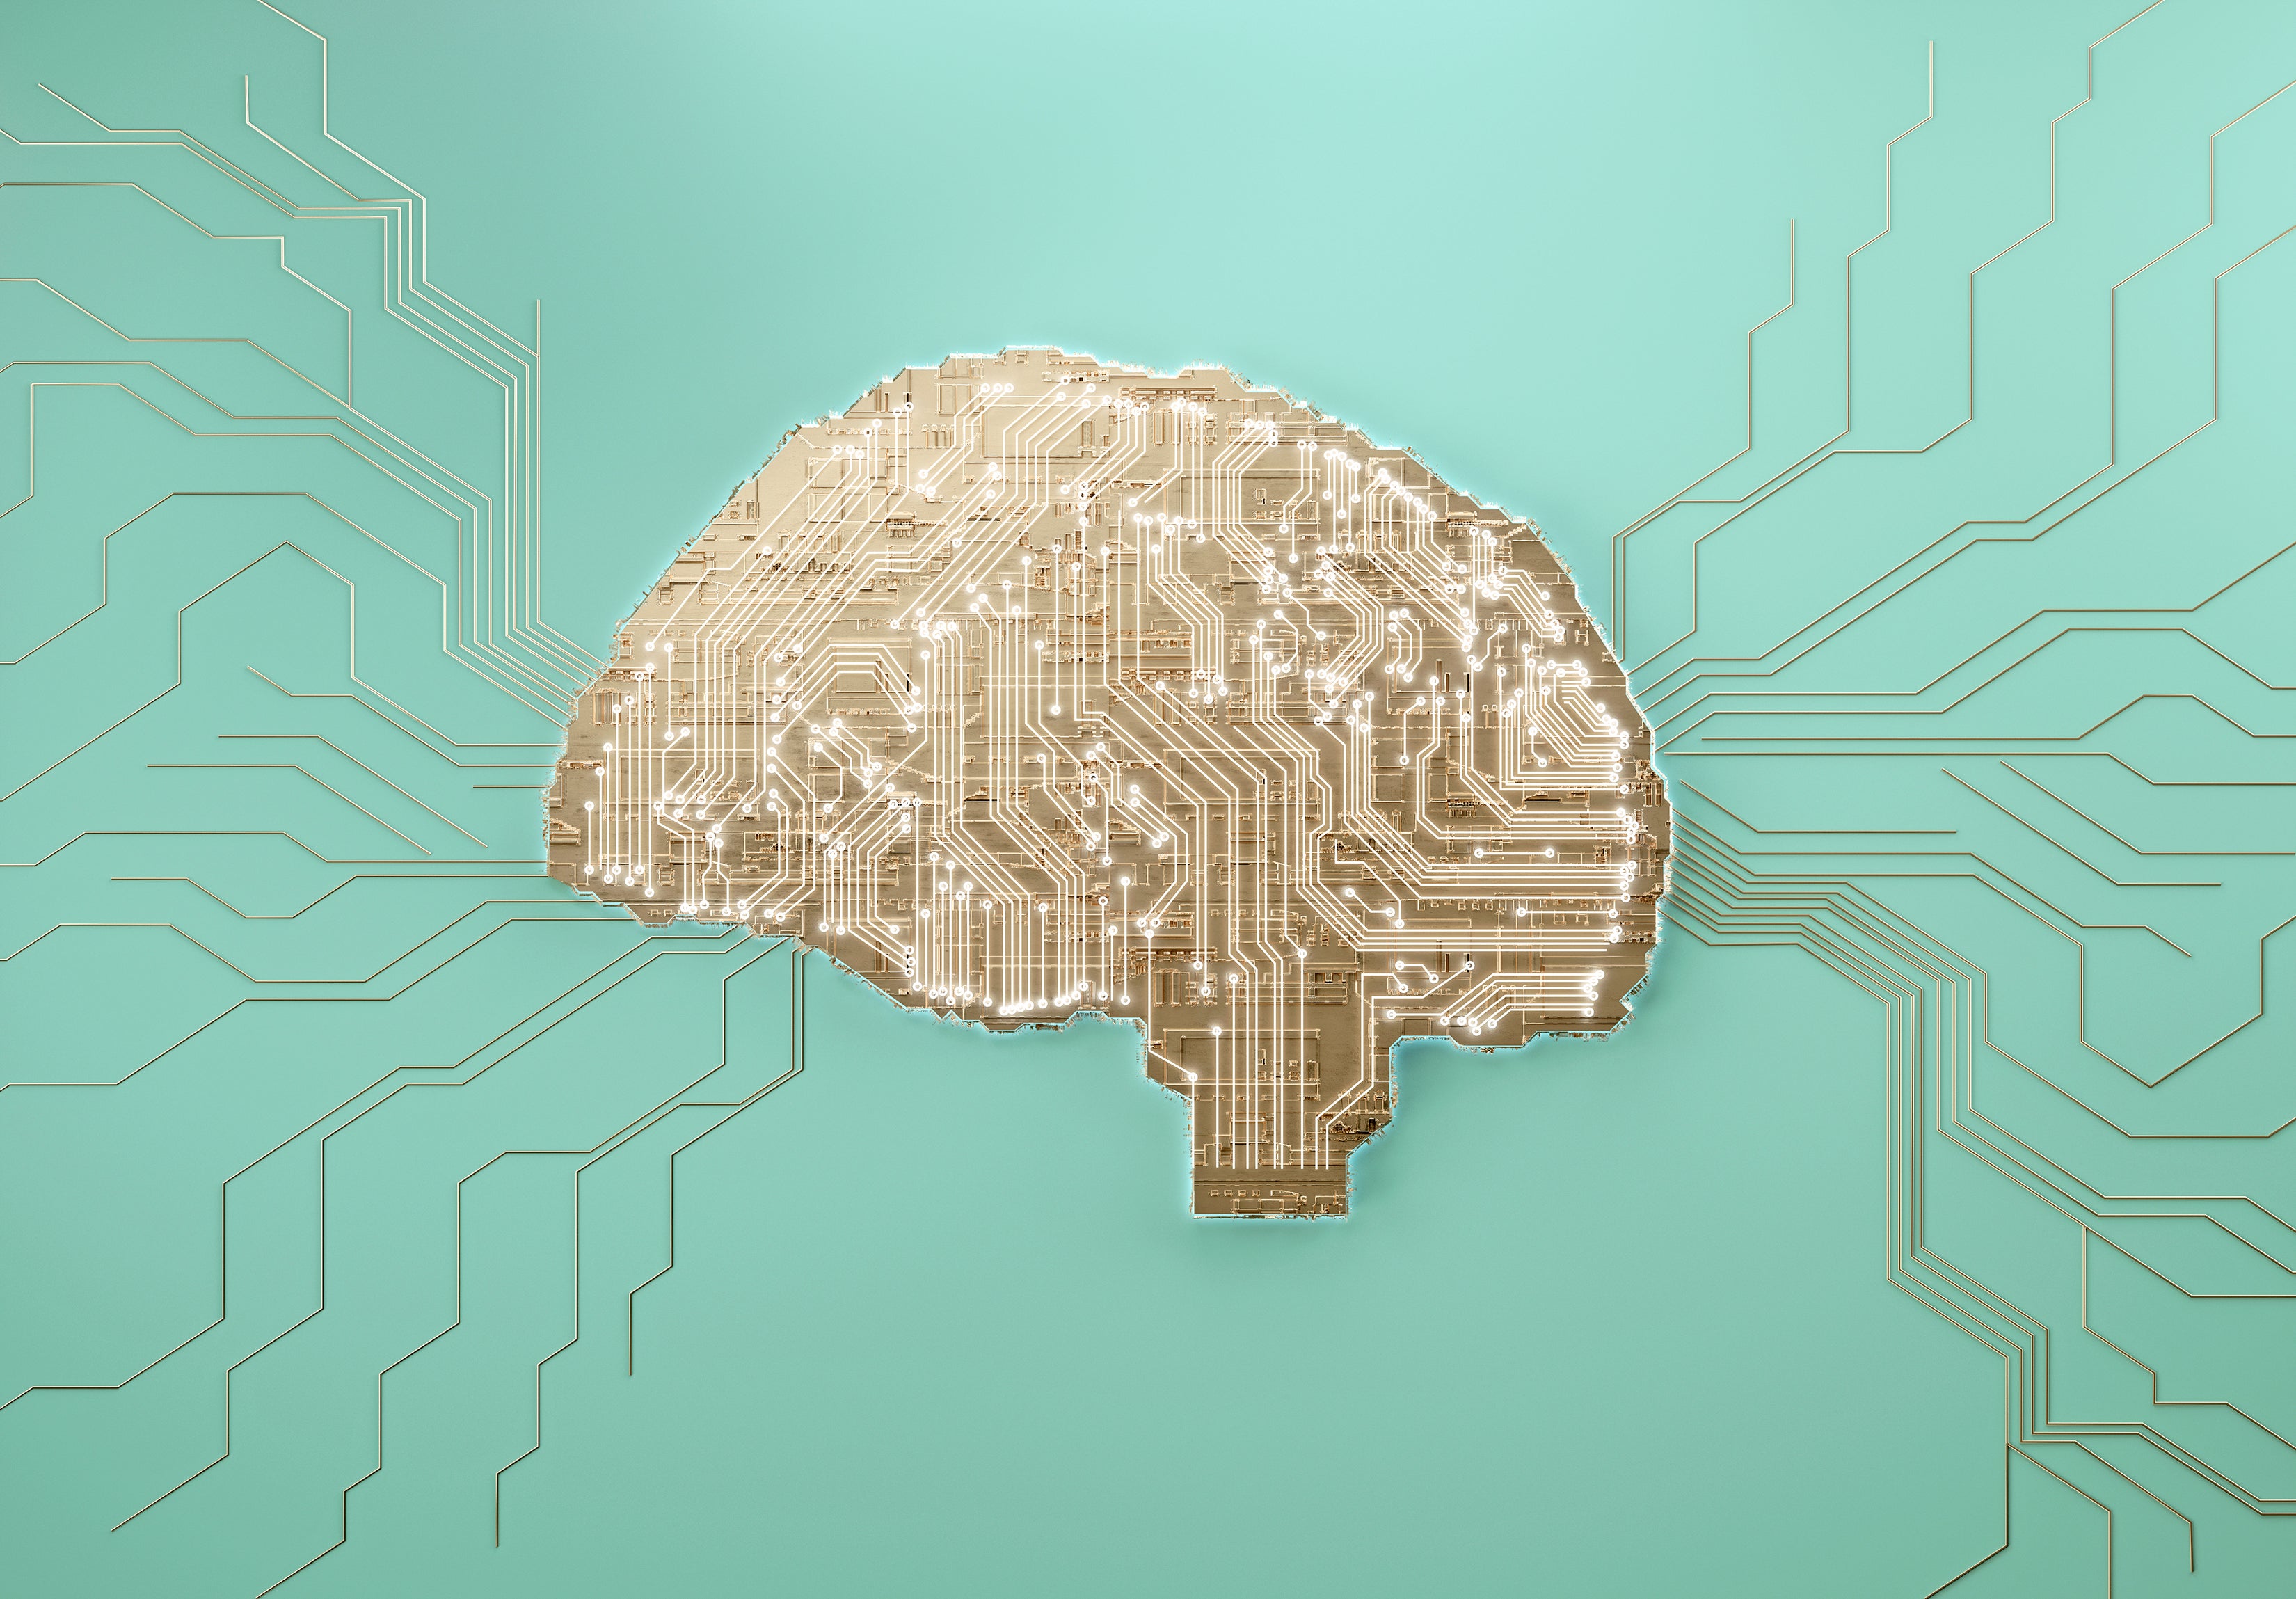 New Brain-Like Computing Device Simulates Human Learning, News